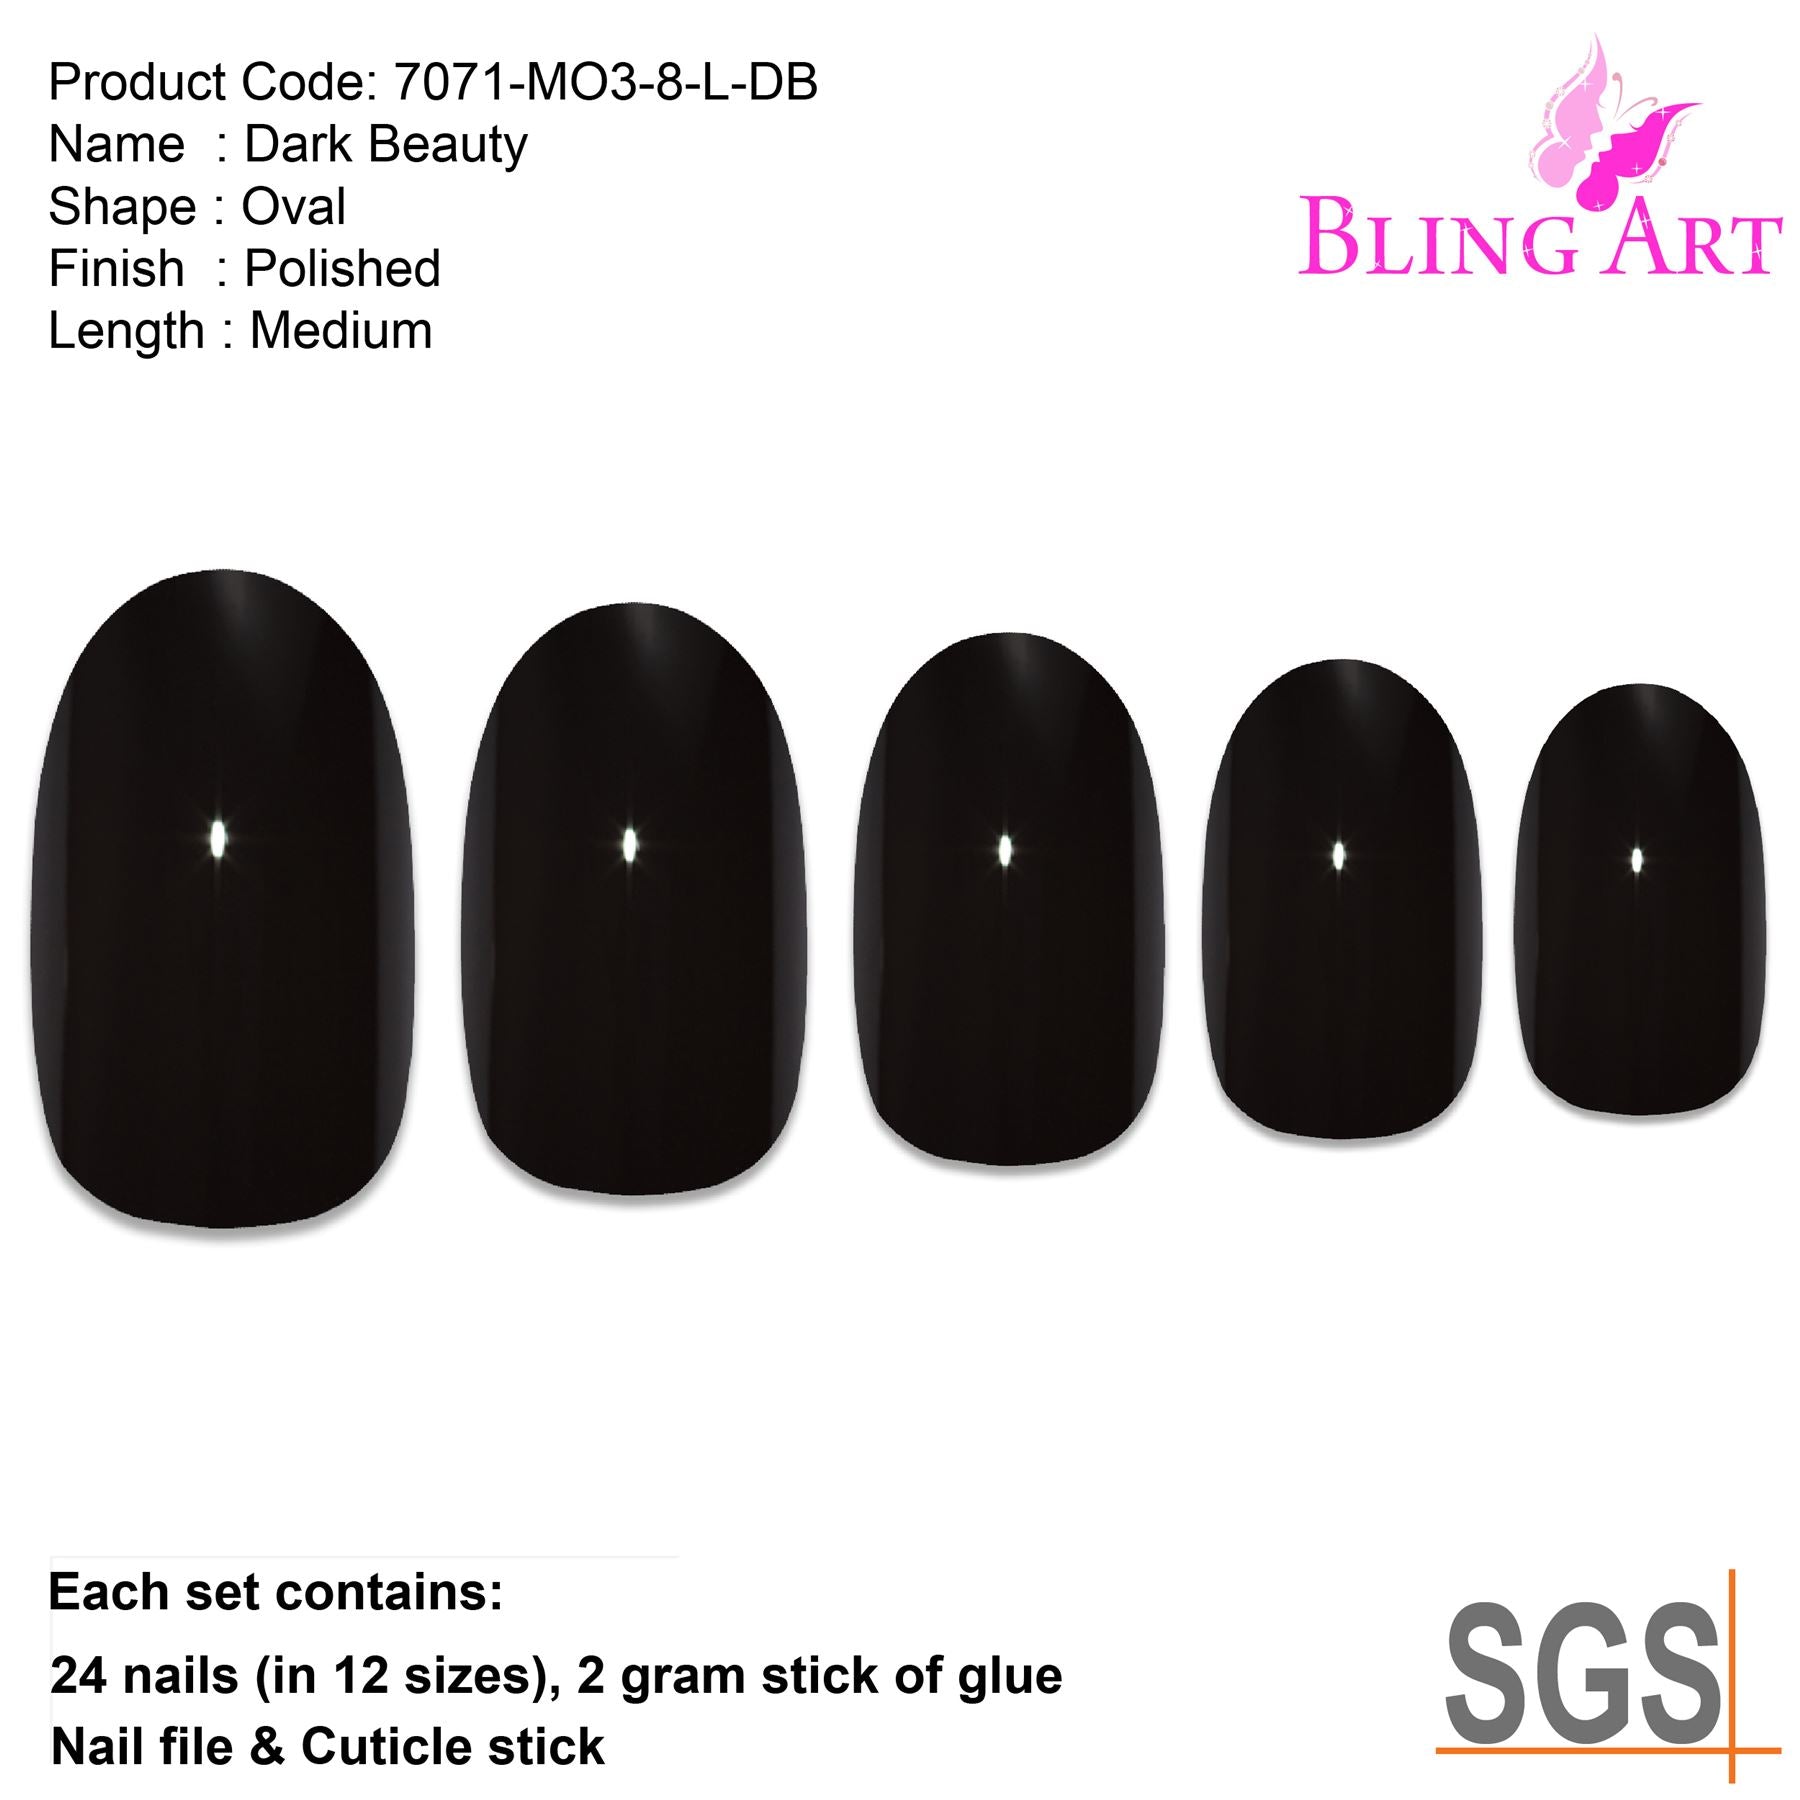 False Nails by Bling Art Black Polished Oval Medium Fake 24 Acrylic Nail Tips